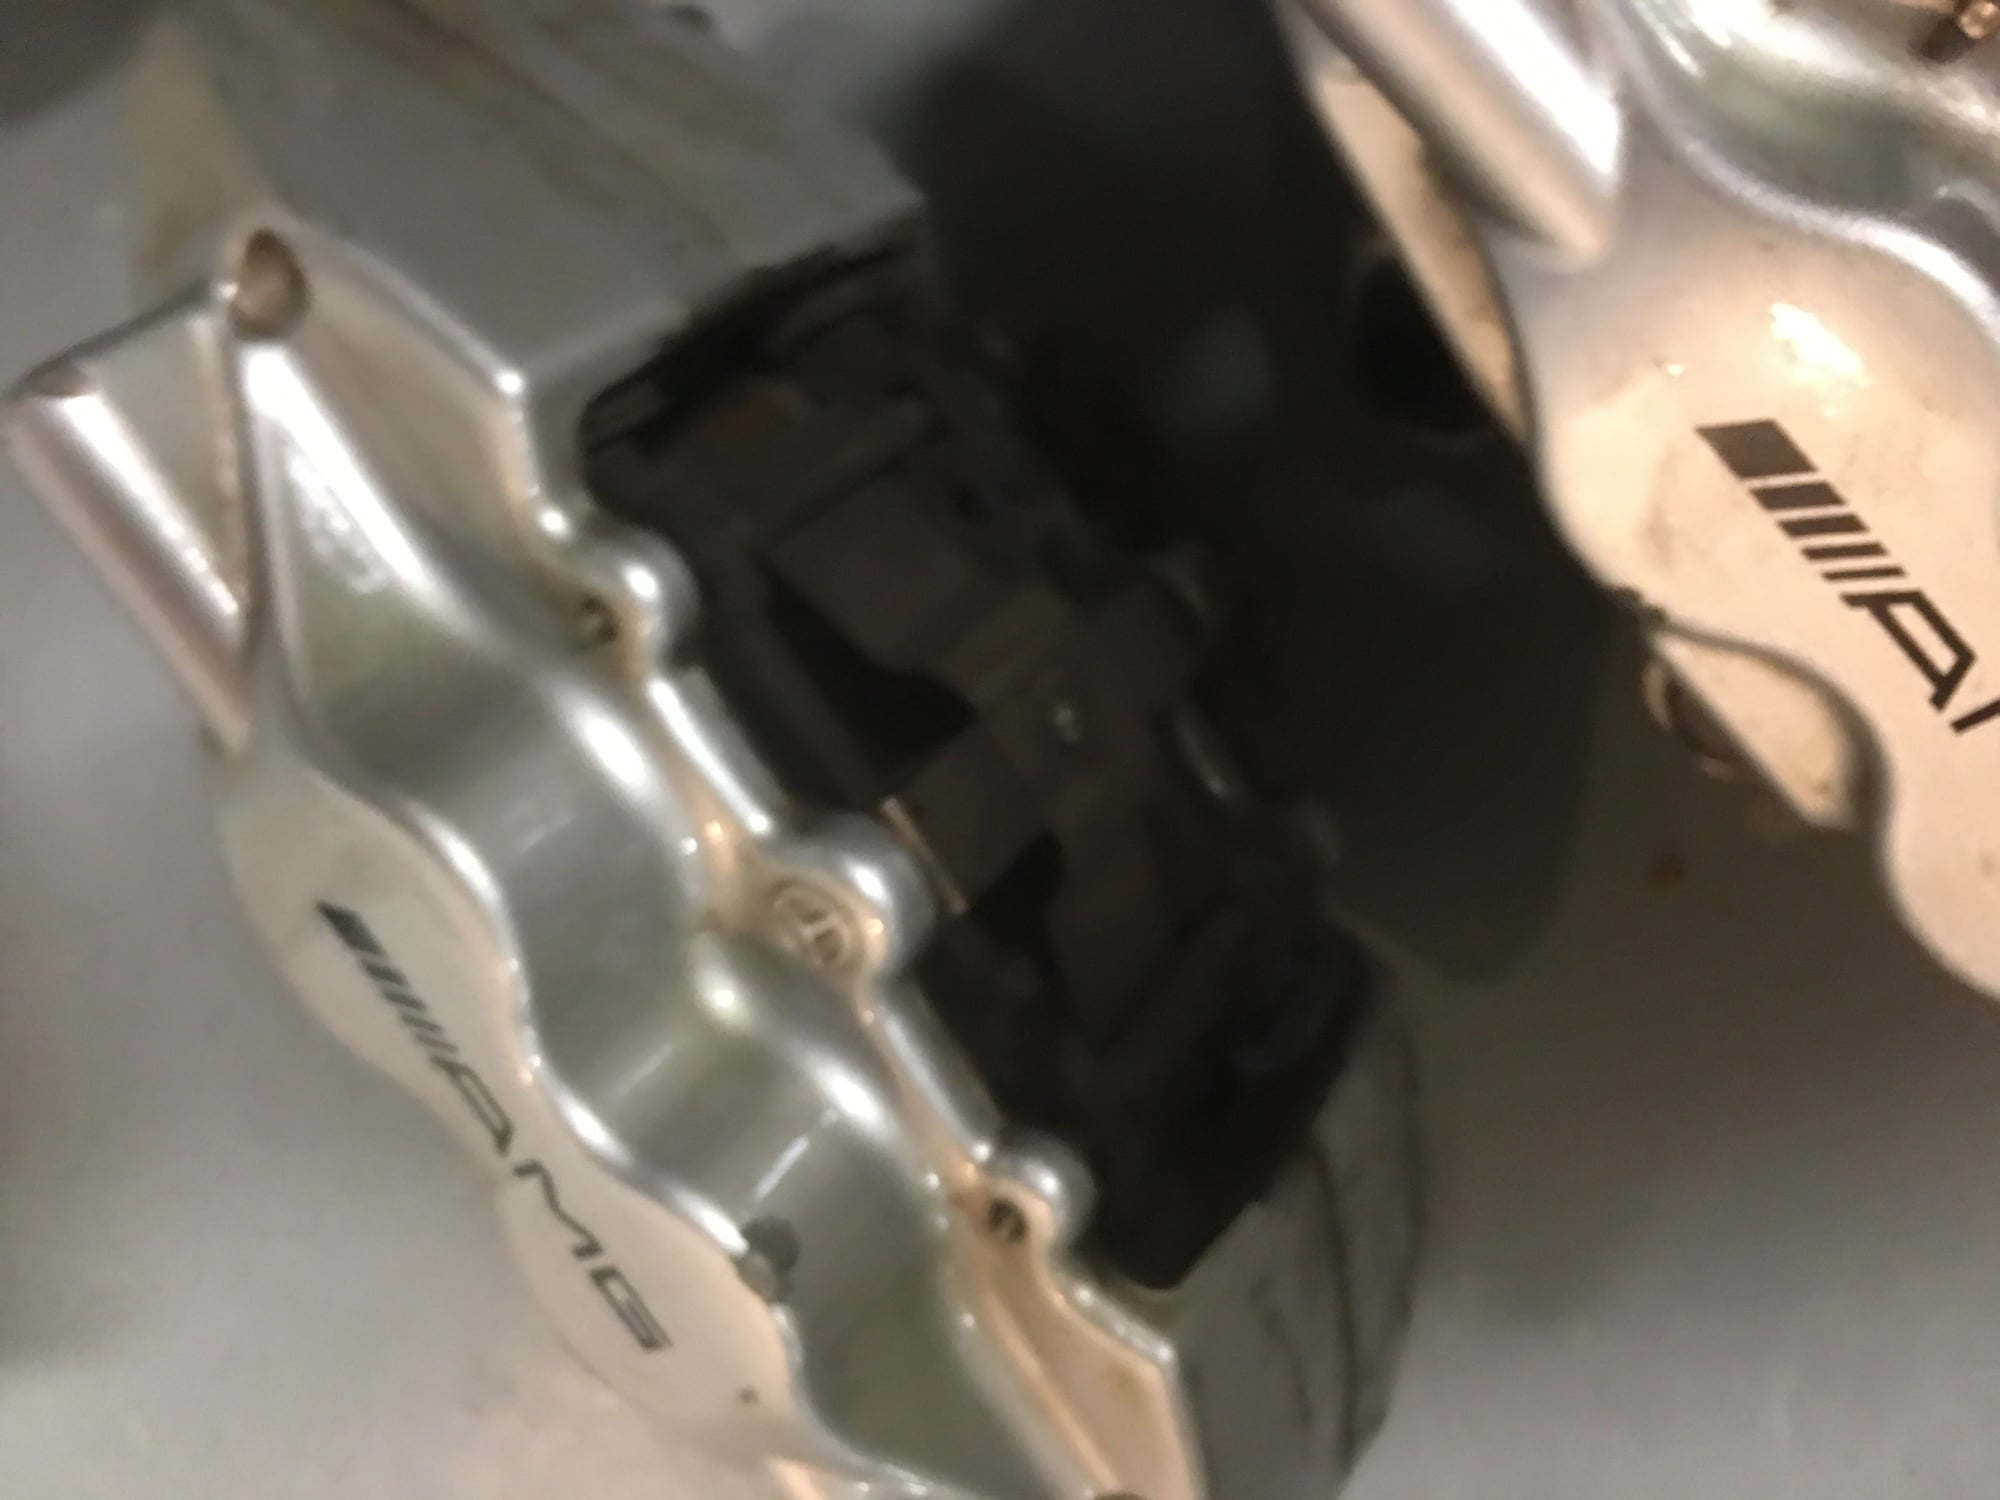 Brakes - S55 brake calipers - Used - Milwaukee, WI 53225, United States